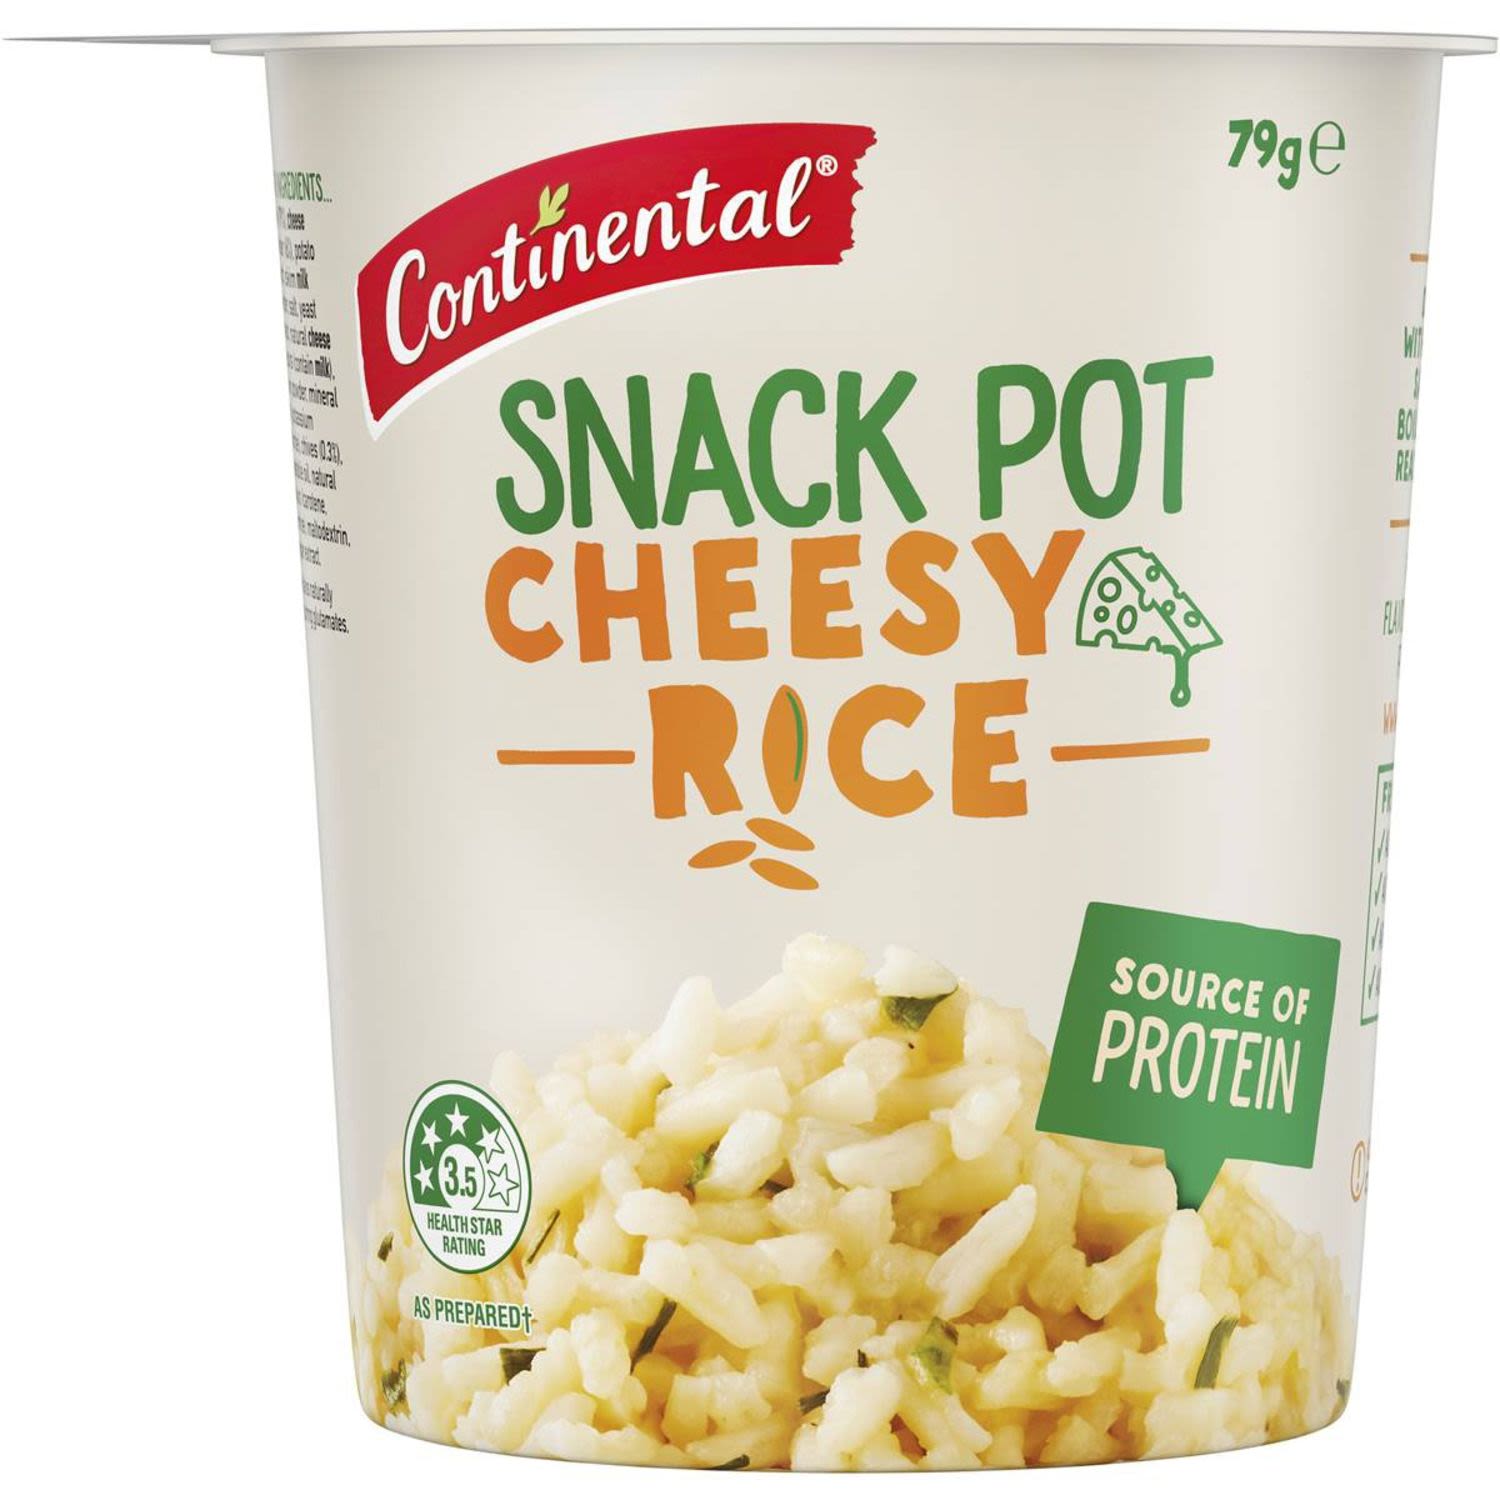 Continental Snack Pot Cheesy Rice, 79 Gram